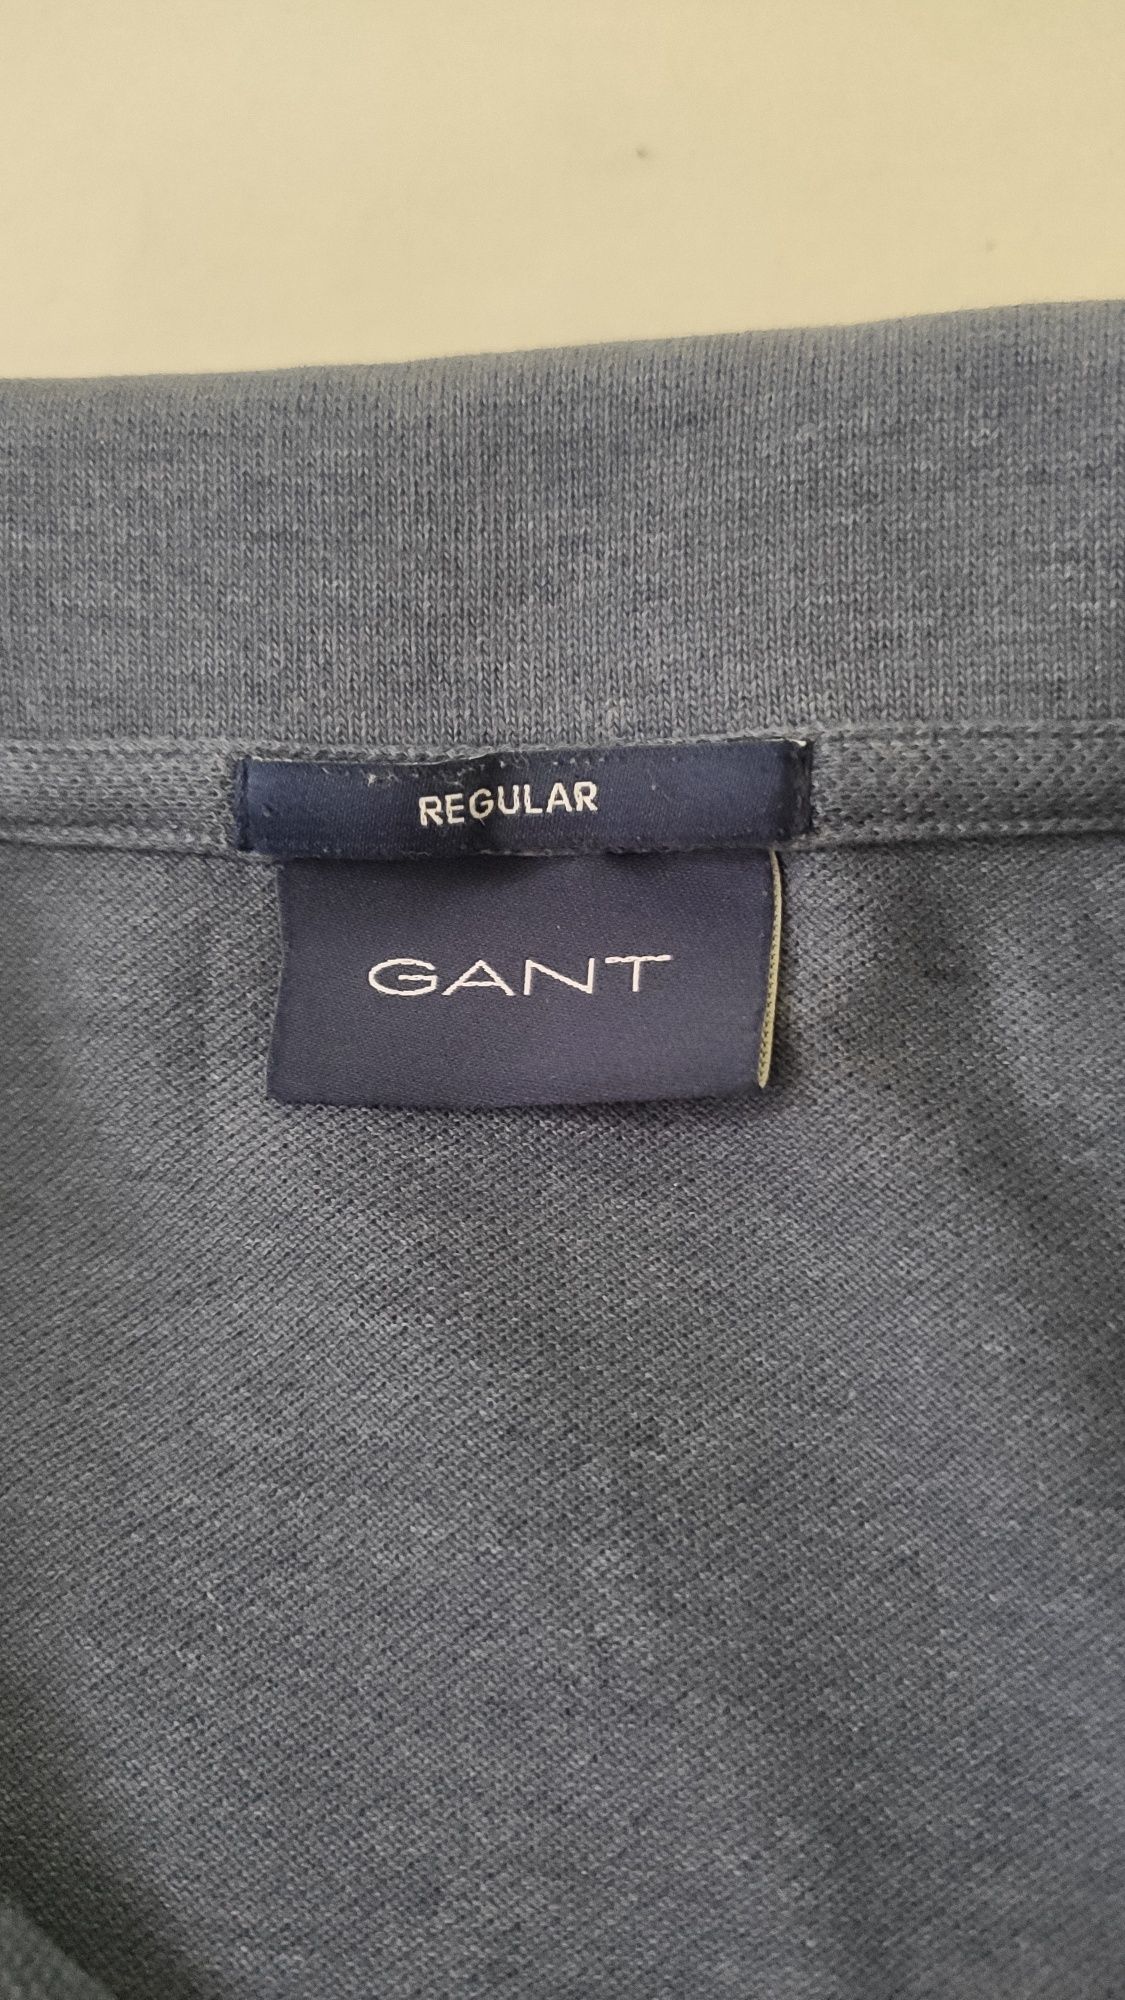 Koszulka męska Gant polo rozmiar M.